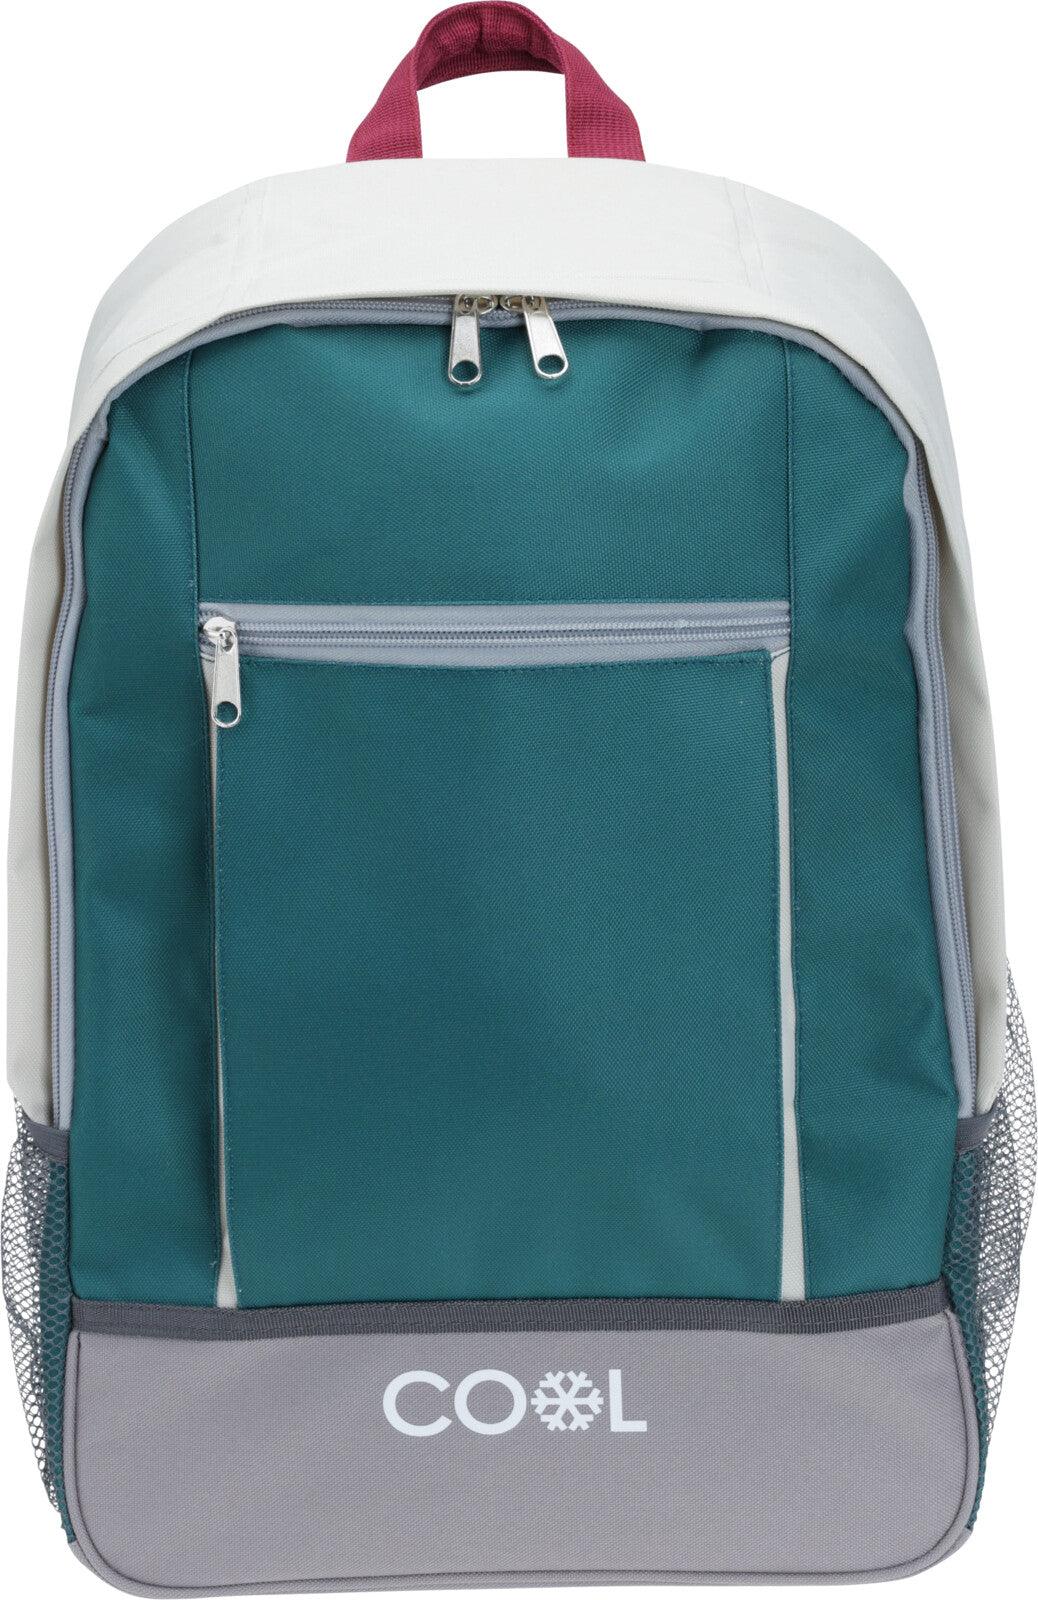 Cool Backpack Cooler Bag | Assorted Colour | 20L